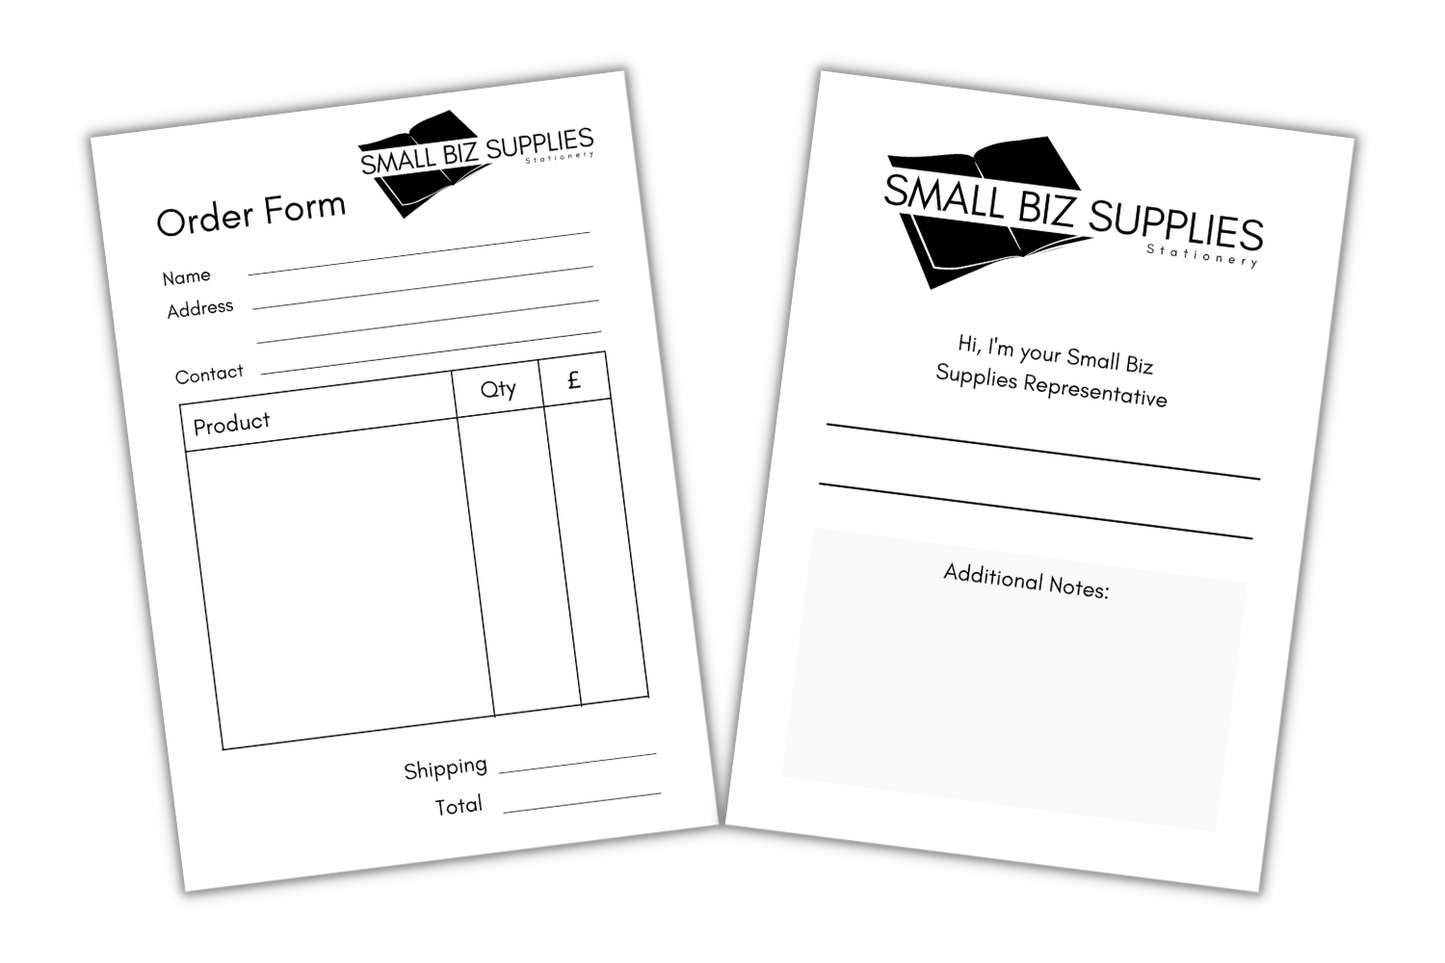 Small Biz Supplies Representatives Order Forms